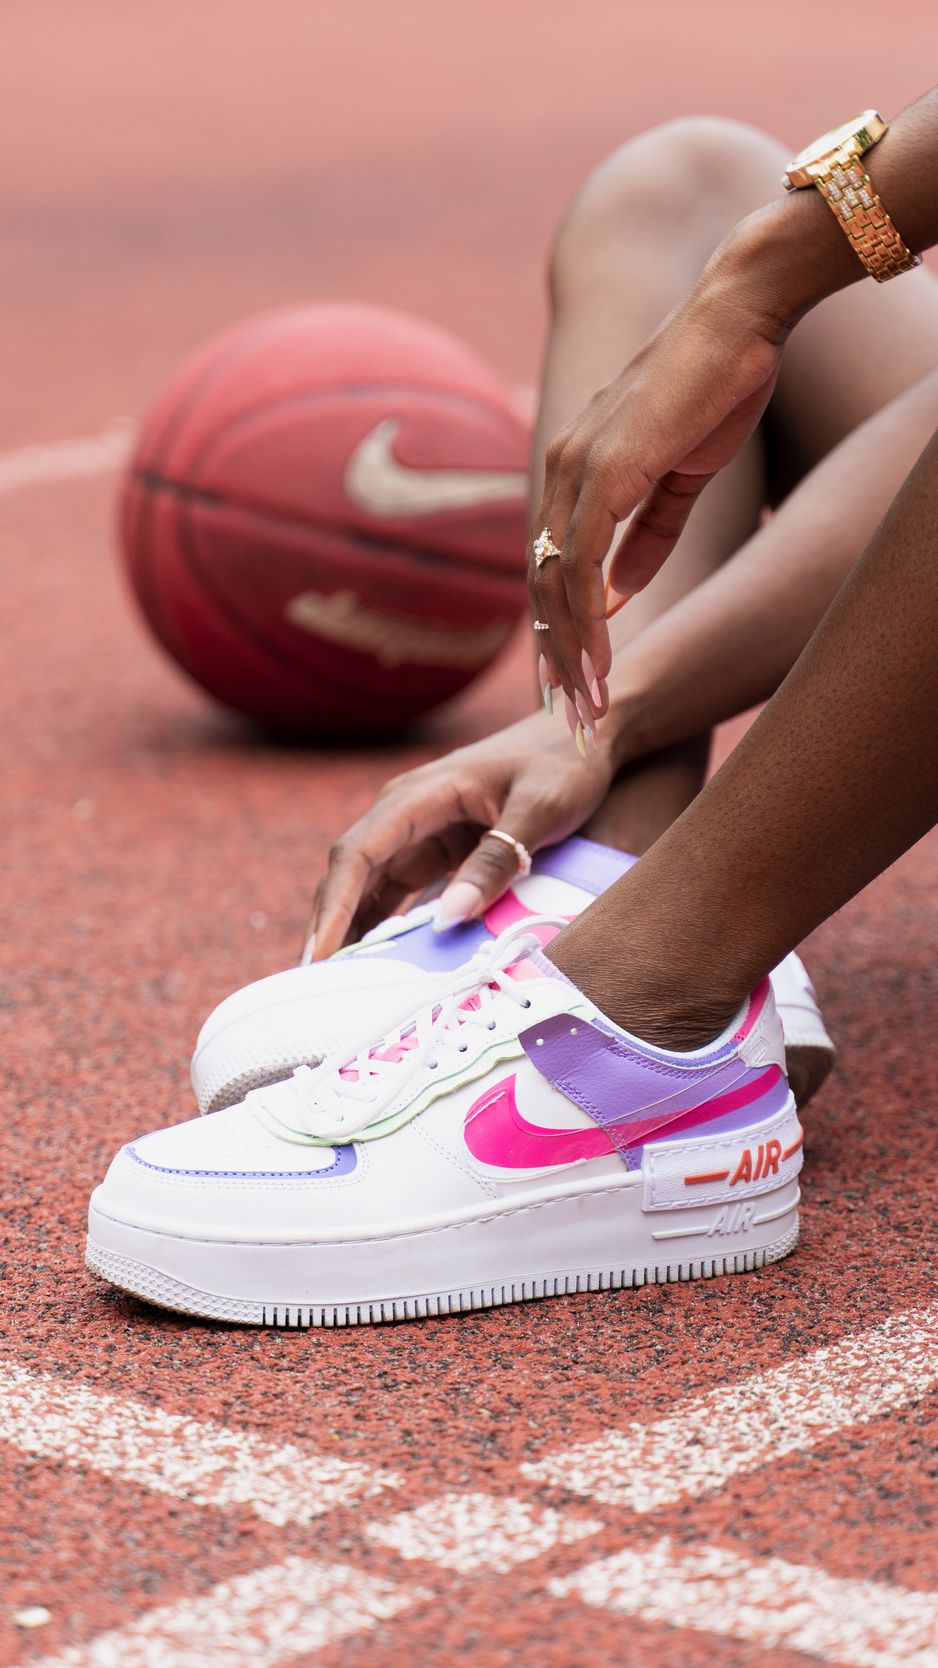 914 Pink Basketball Court Images Stock Photos  Vectors  Shutterstock